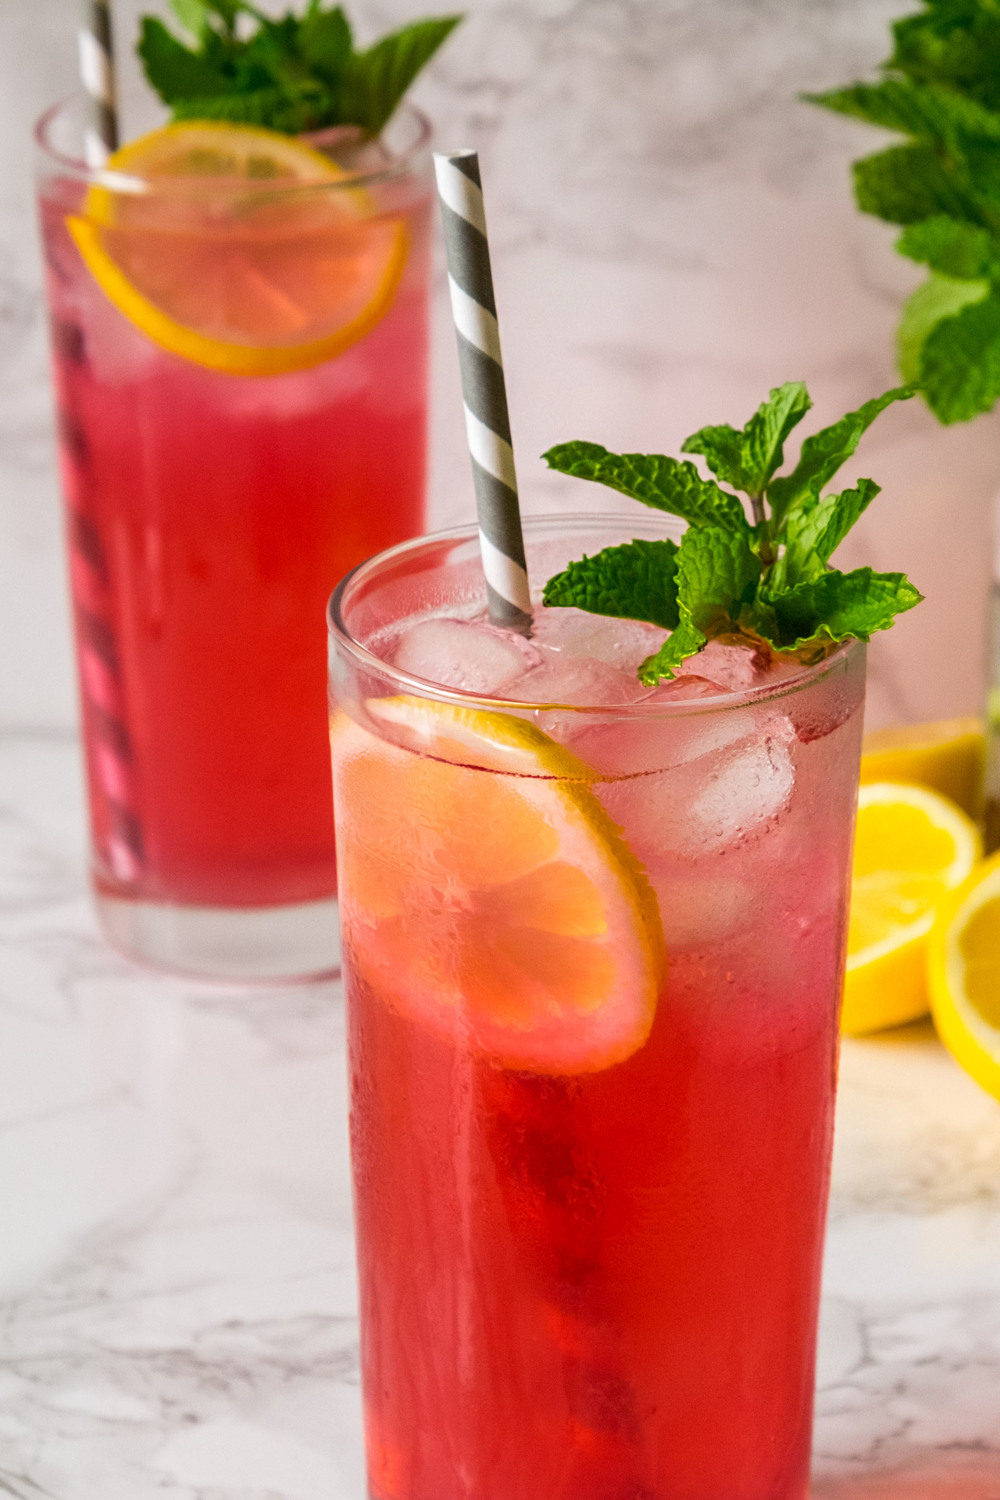 Blueberry infused vodka pink lemonade